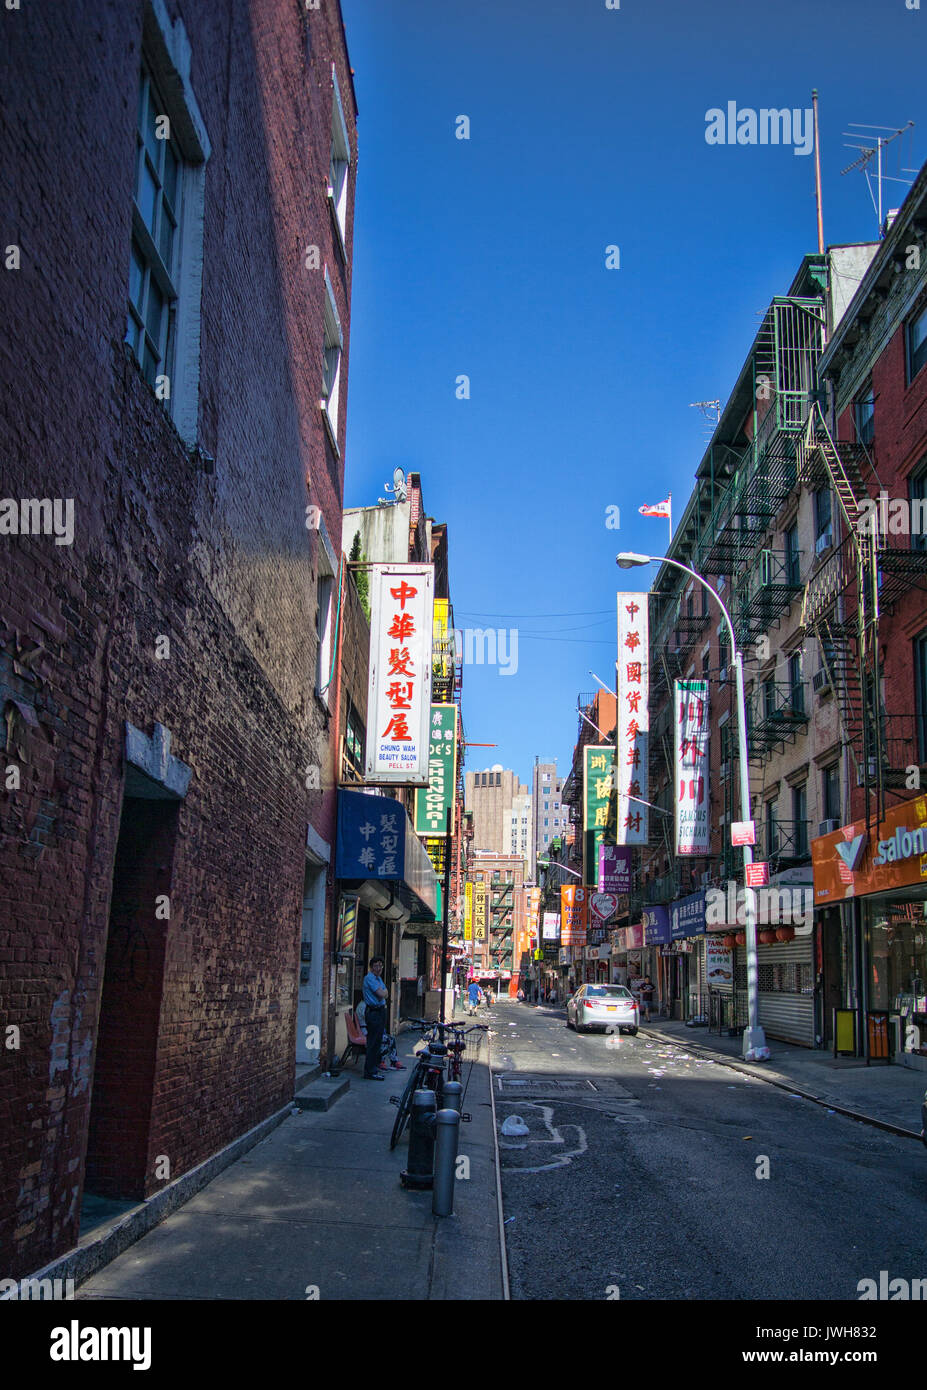 street in chinatown Stock Photo